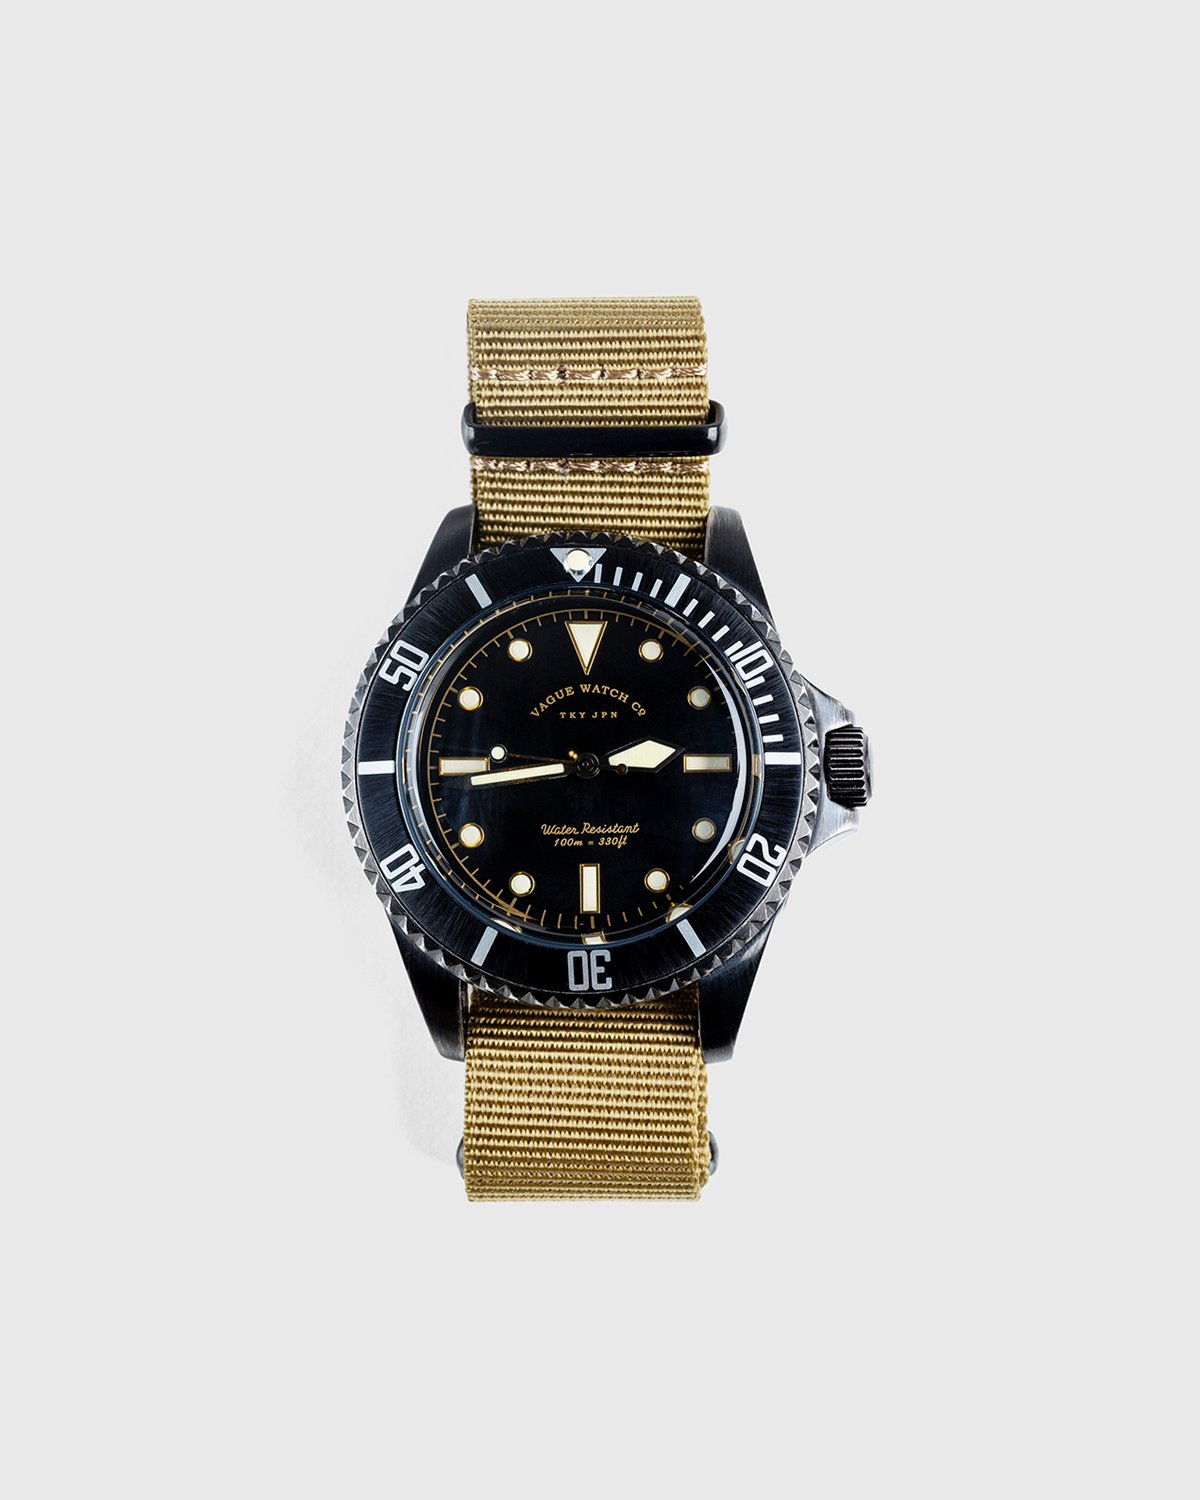 Vague Watch Co. – Submariner Black | Highsnobiety Shop